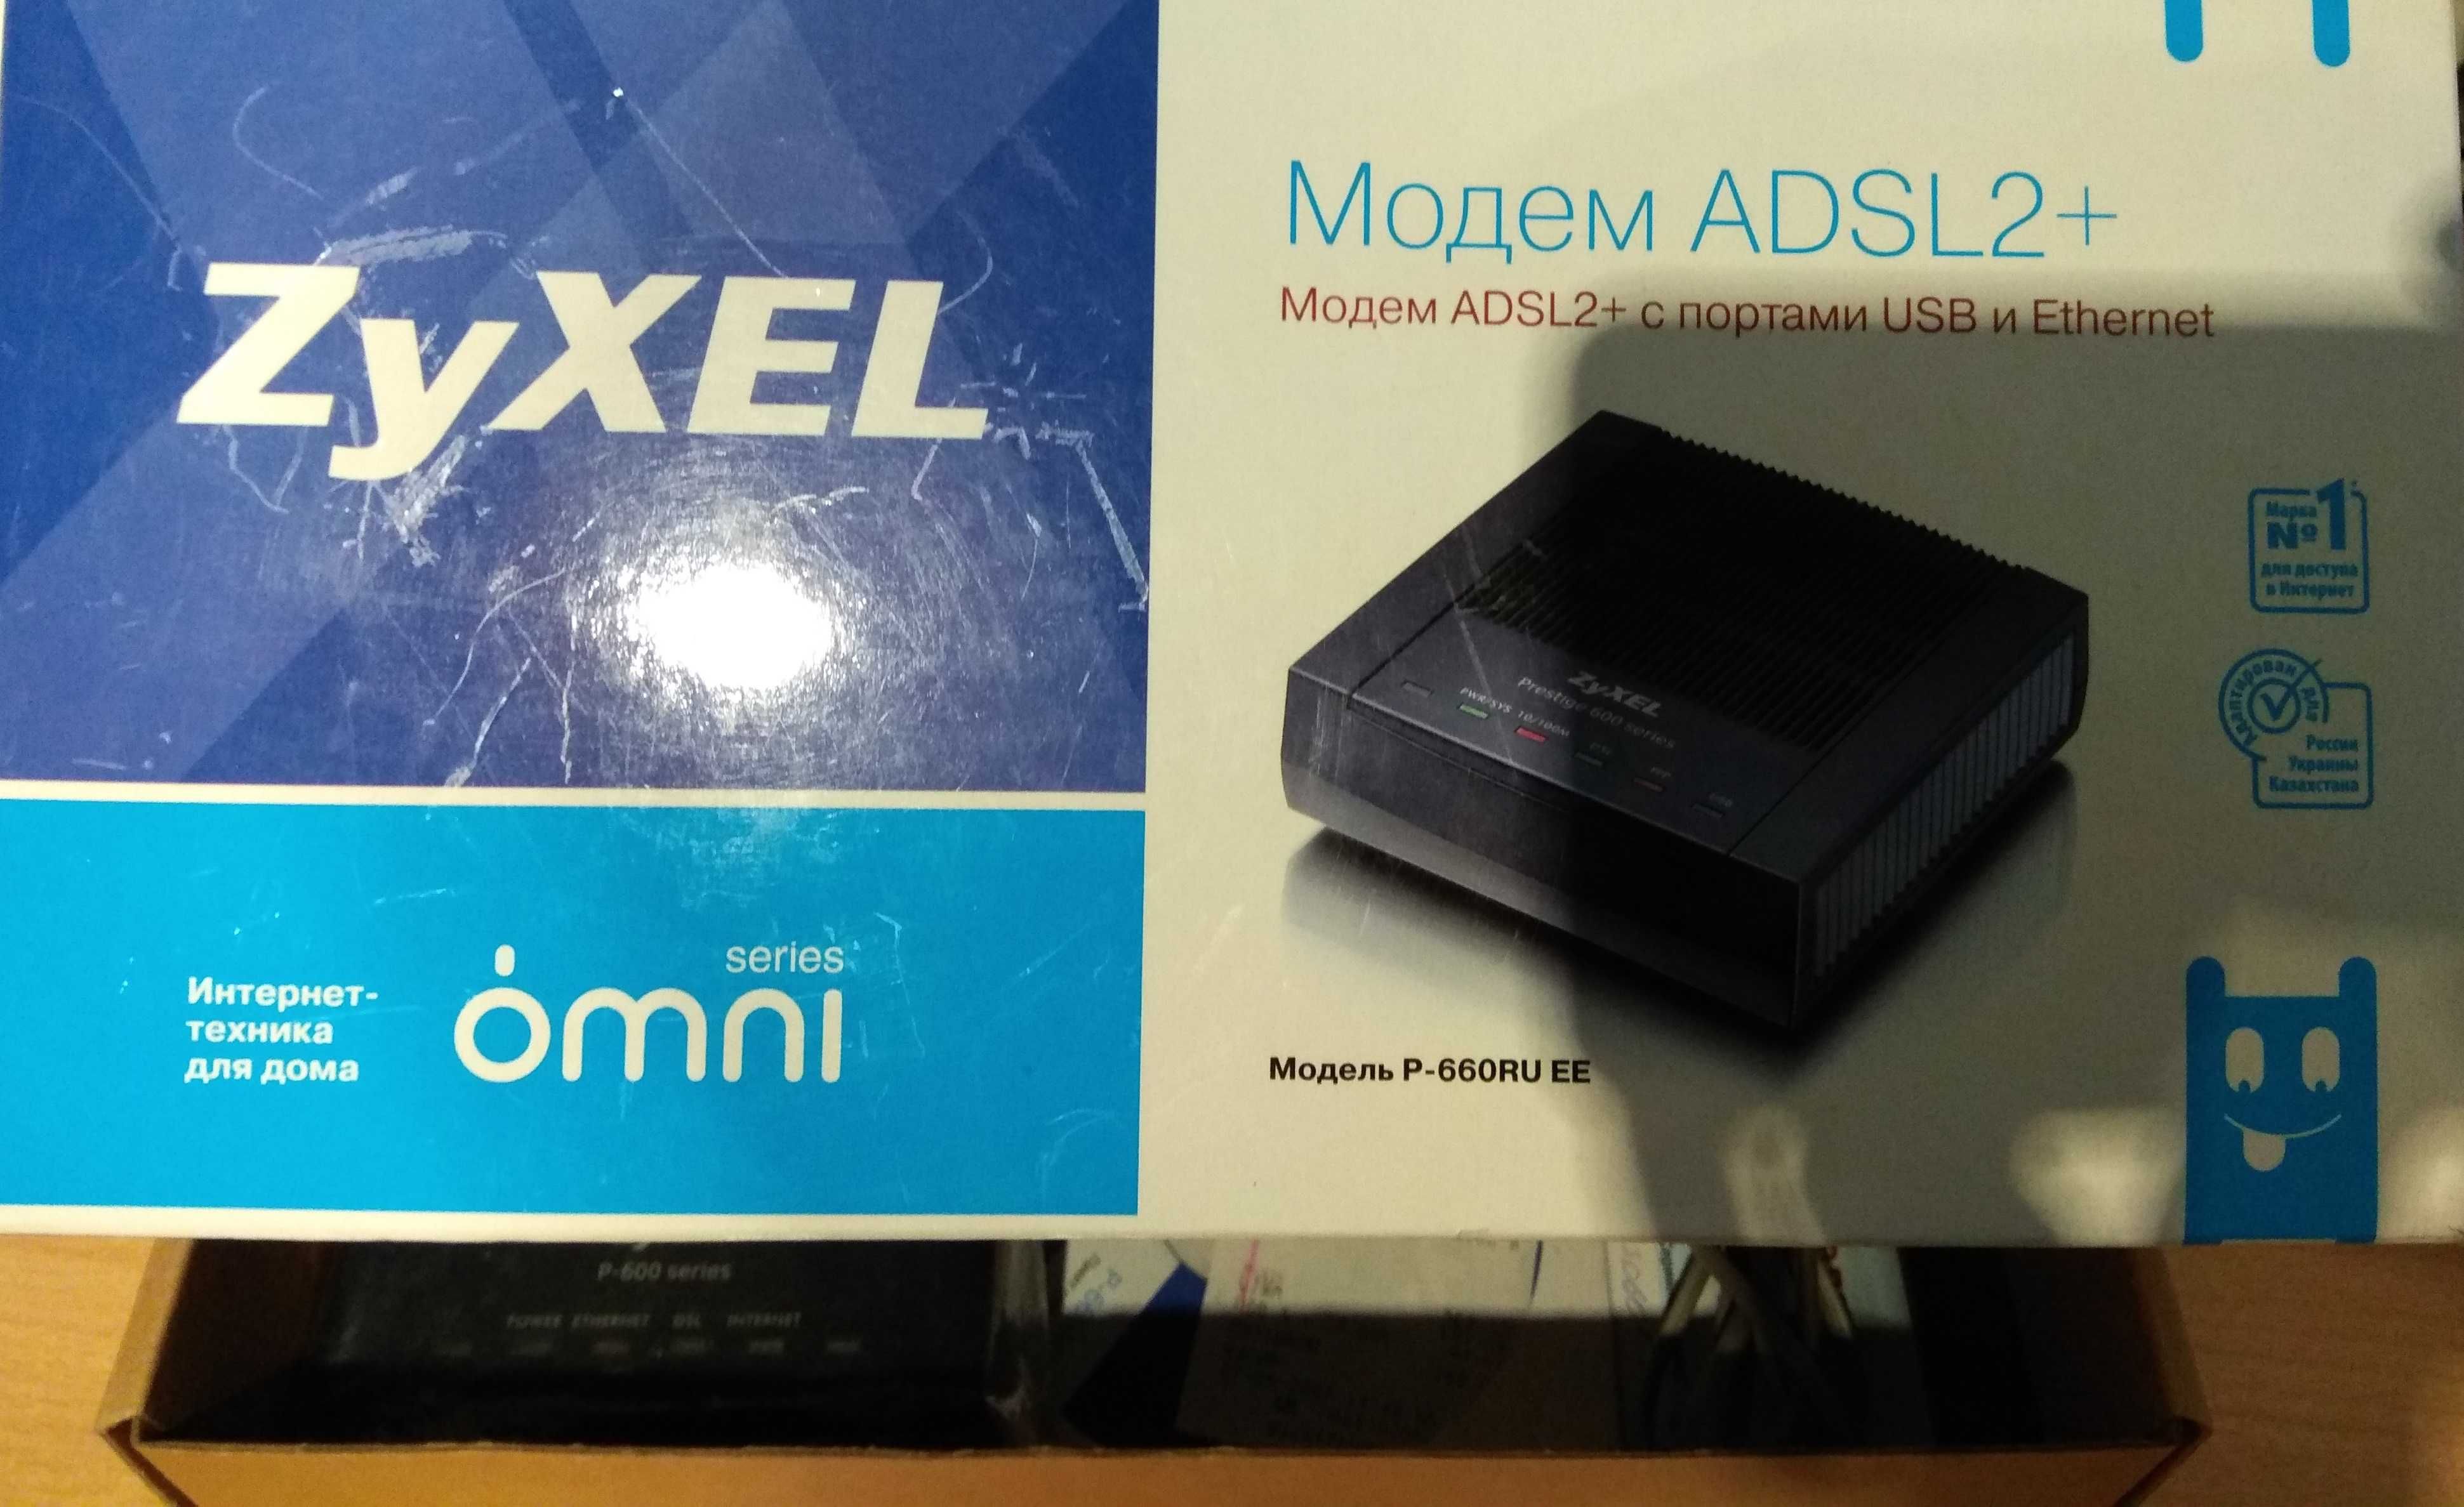 ZyXEL ADSL2+ P660RT2 EE (AnnexA, AnnexB), модем + блок питания 12V, 1A